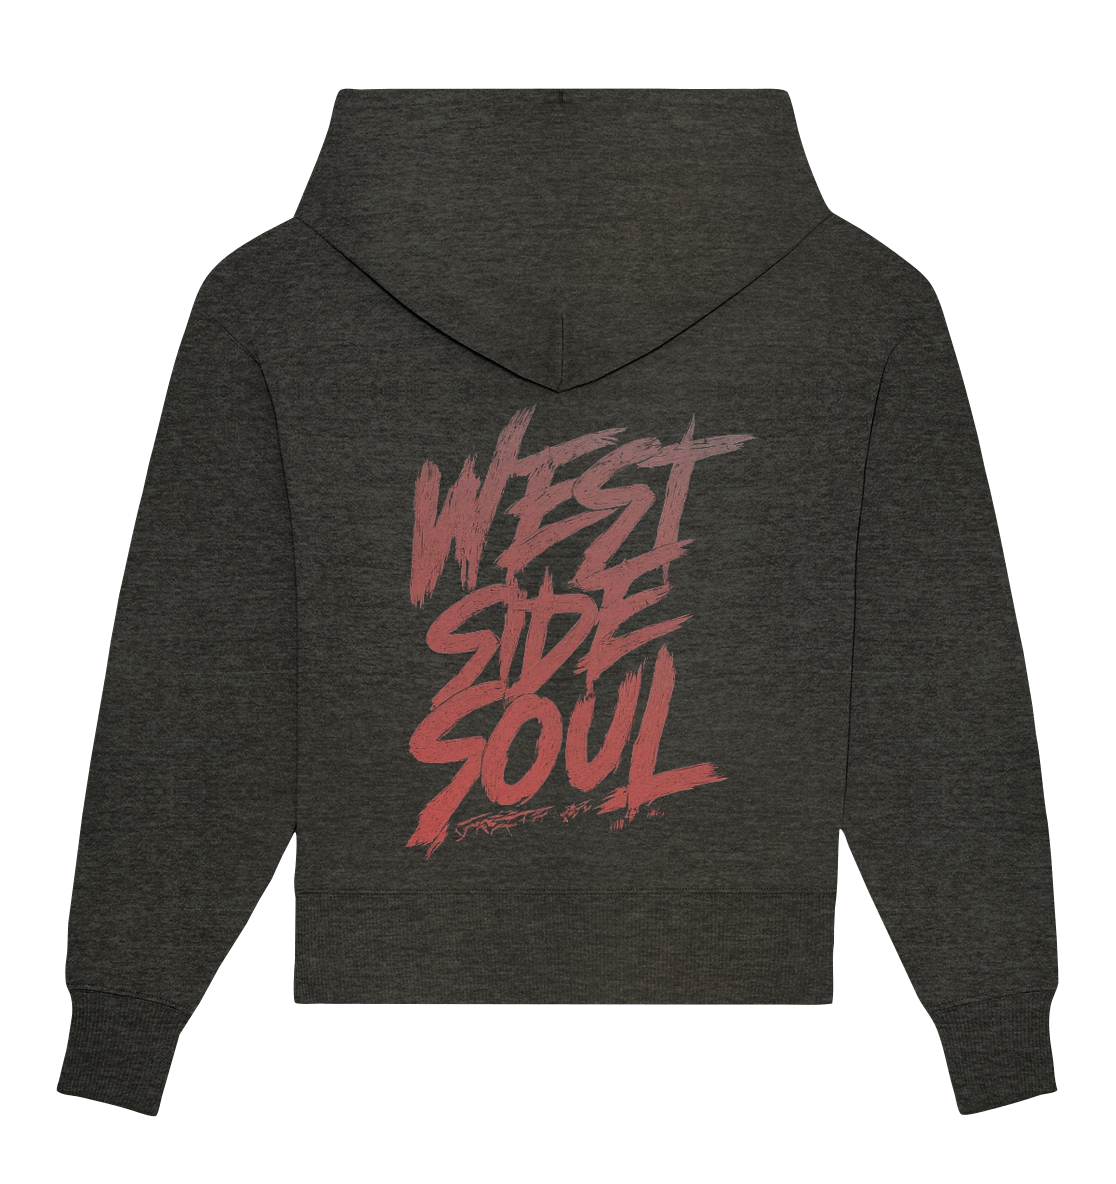 West Side Soul - Organic Oversize Hoodie